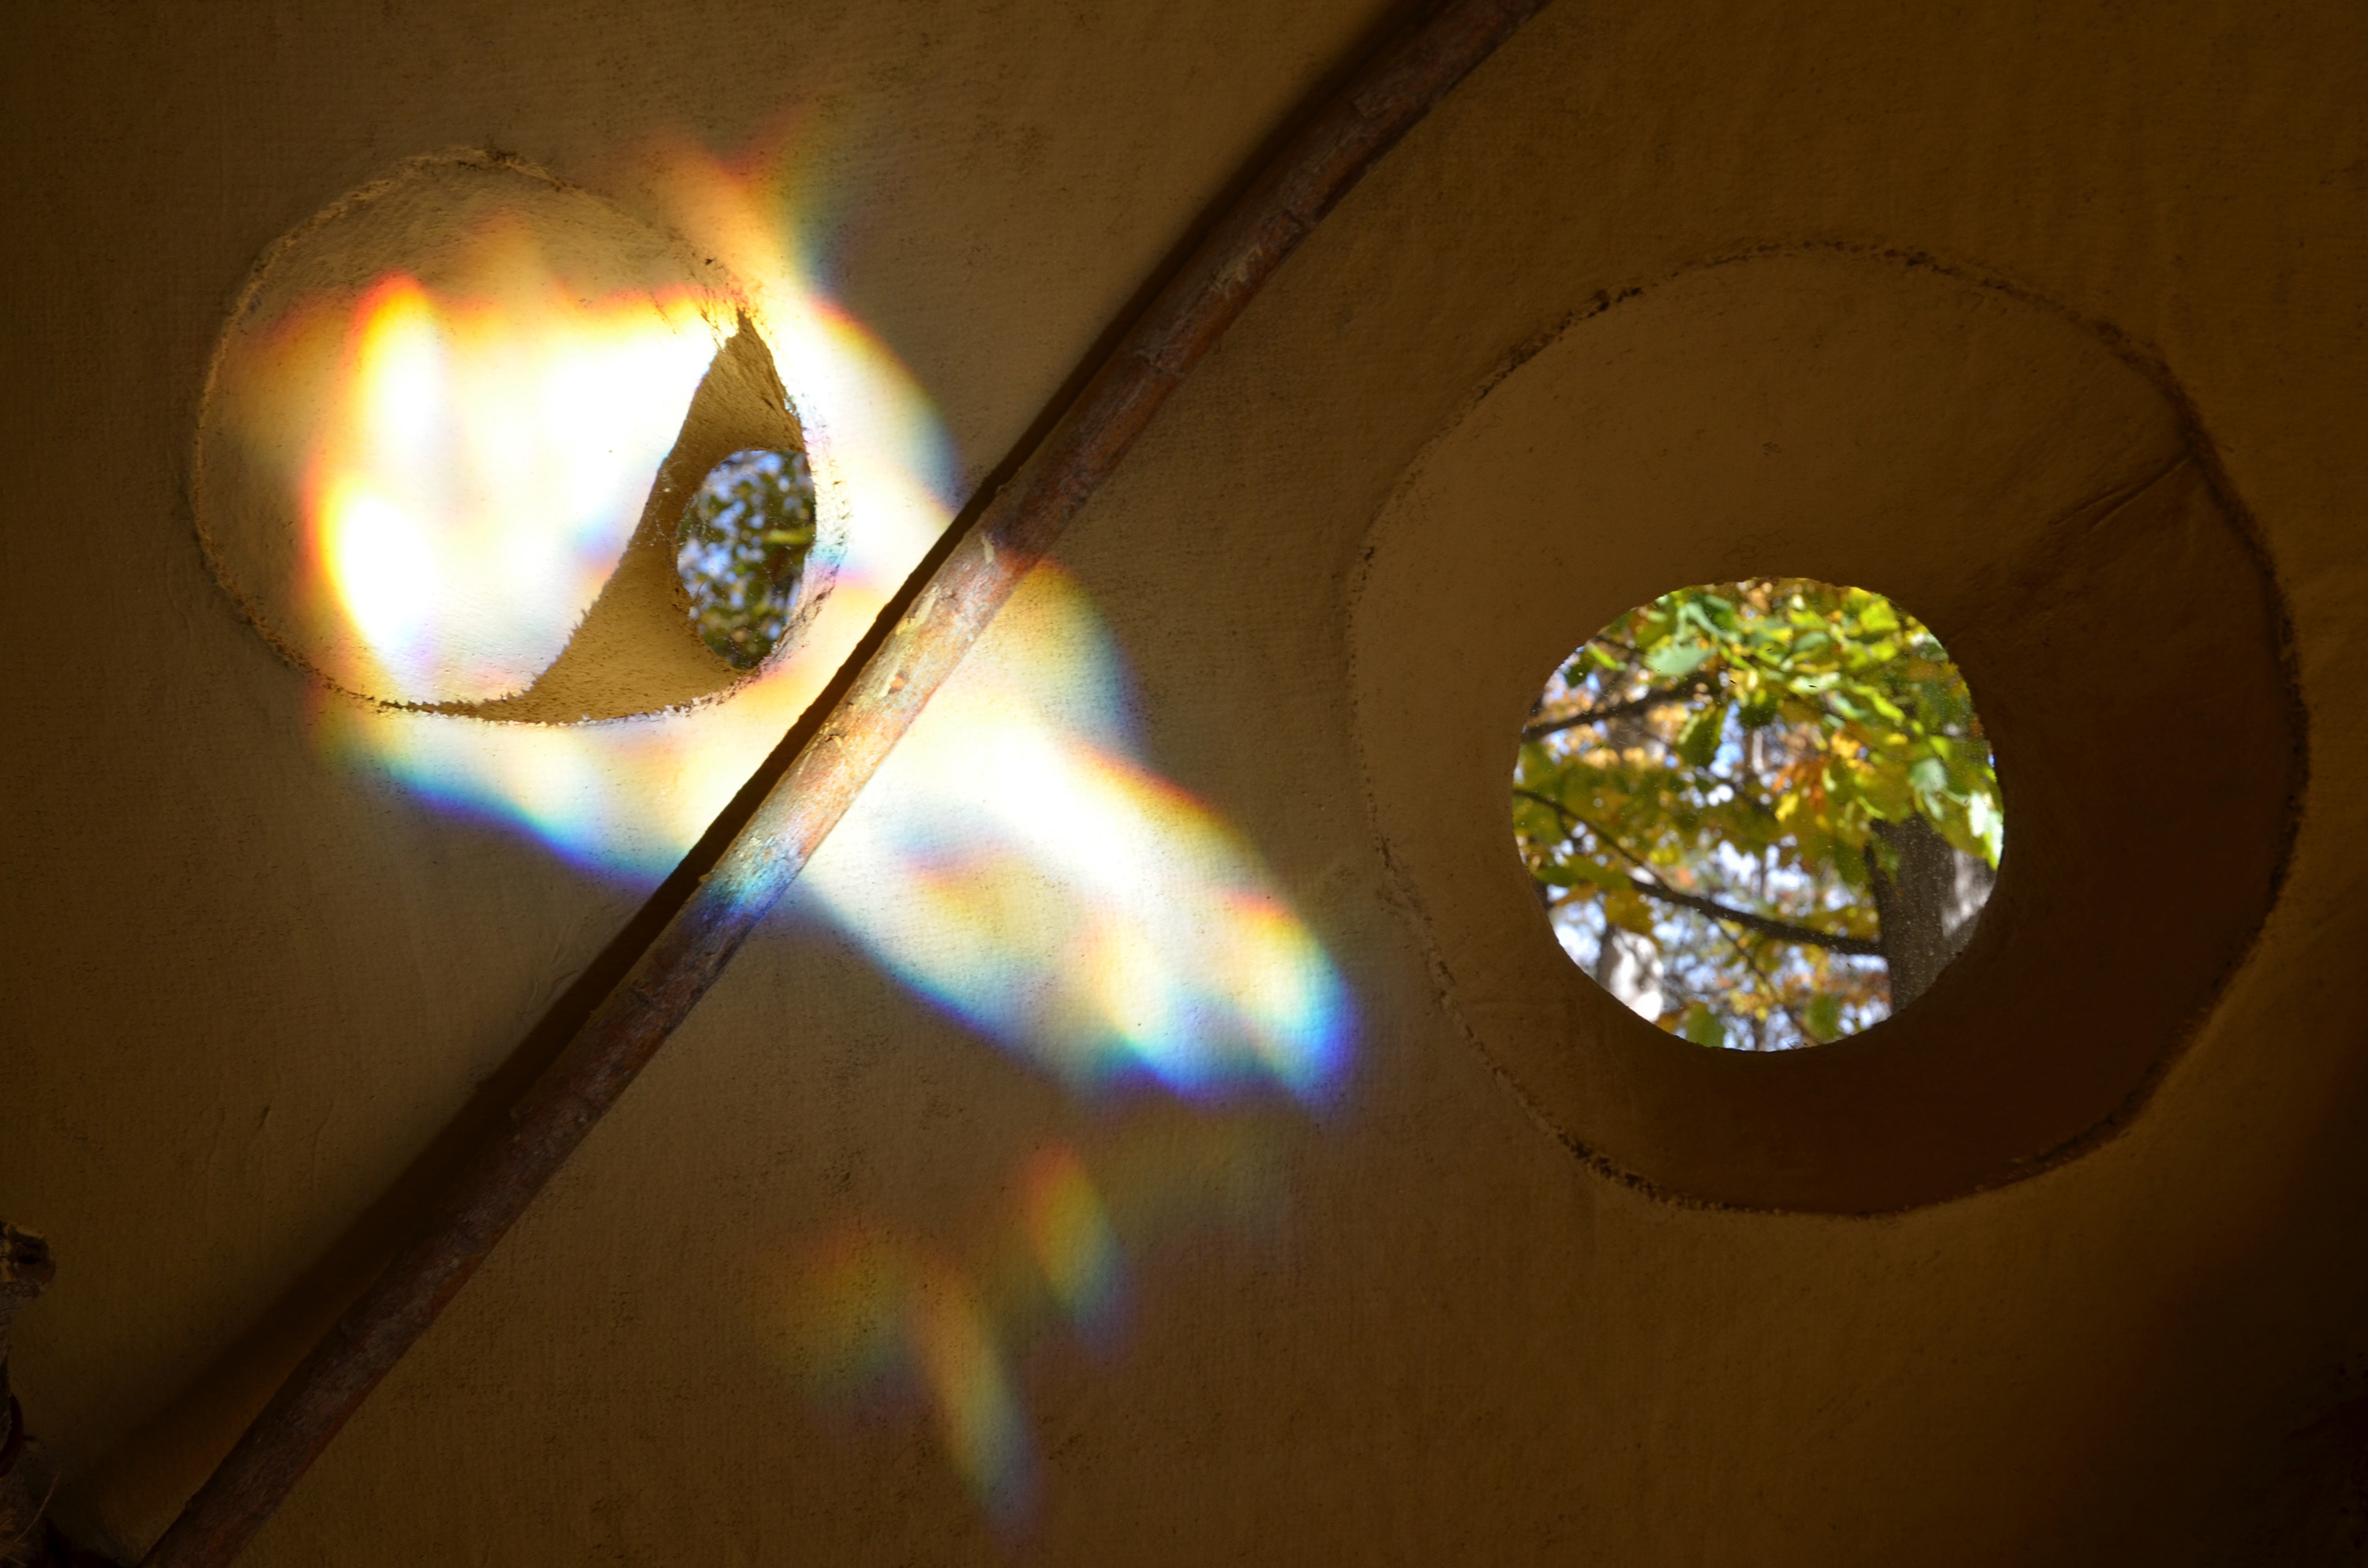 Rainbow is reflecting inside.